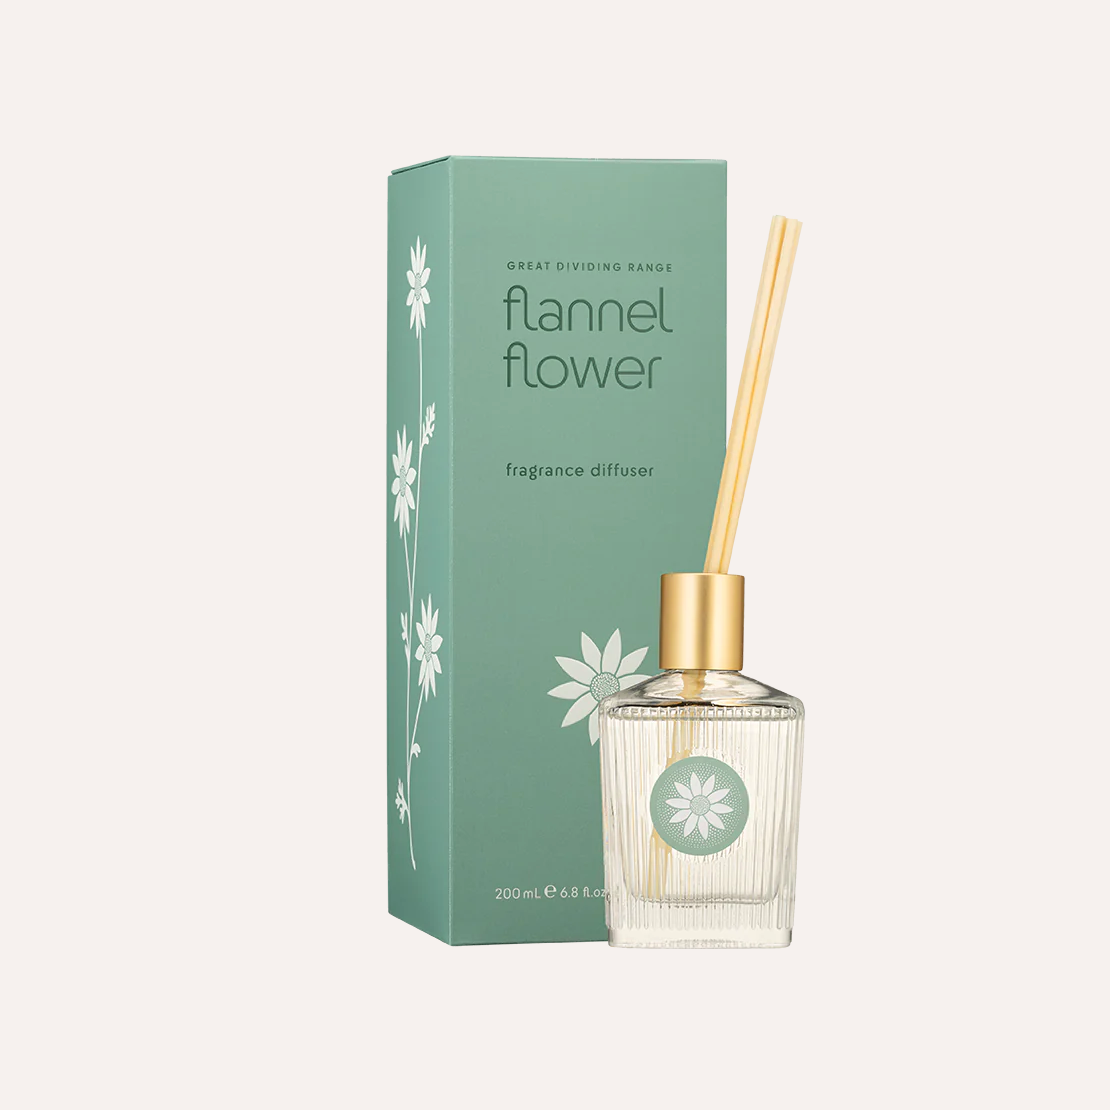 Flannel Flower Fragrance Diffuser 200ml